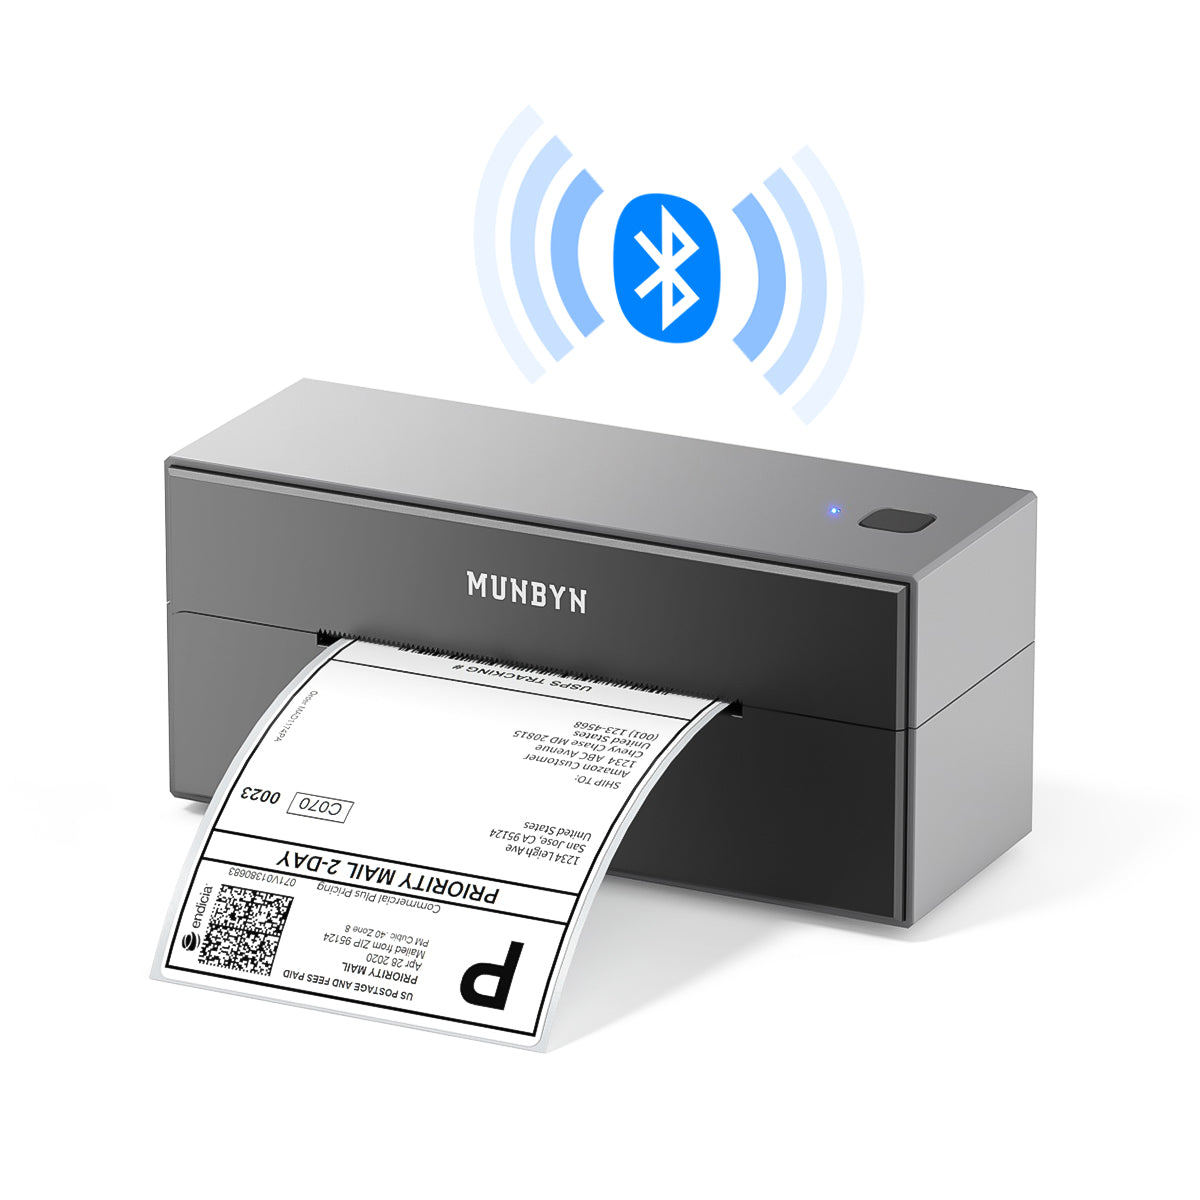 MUNBYN Wireless Bluetooth Thermal Label Printer P129